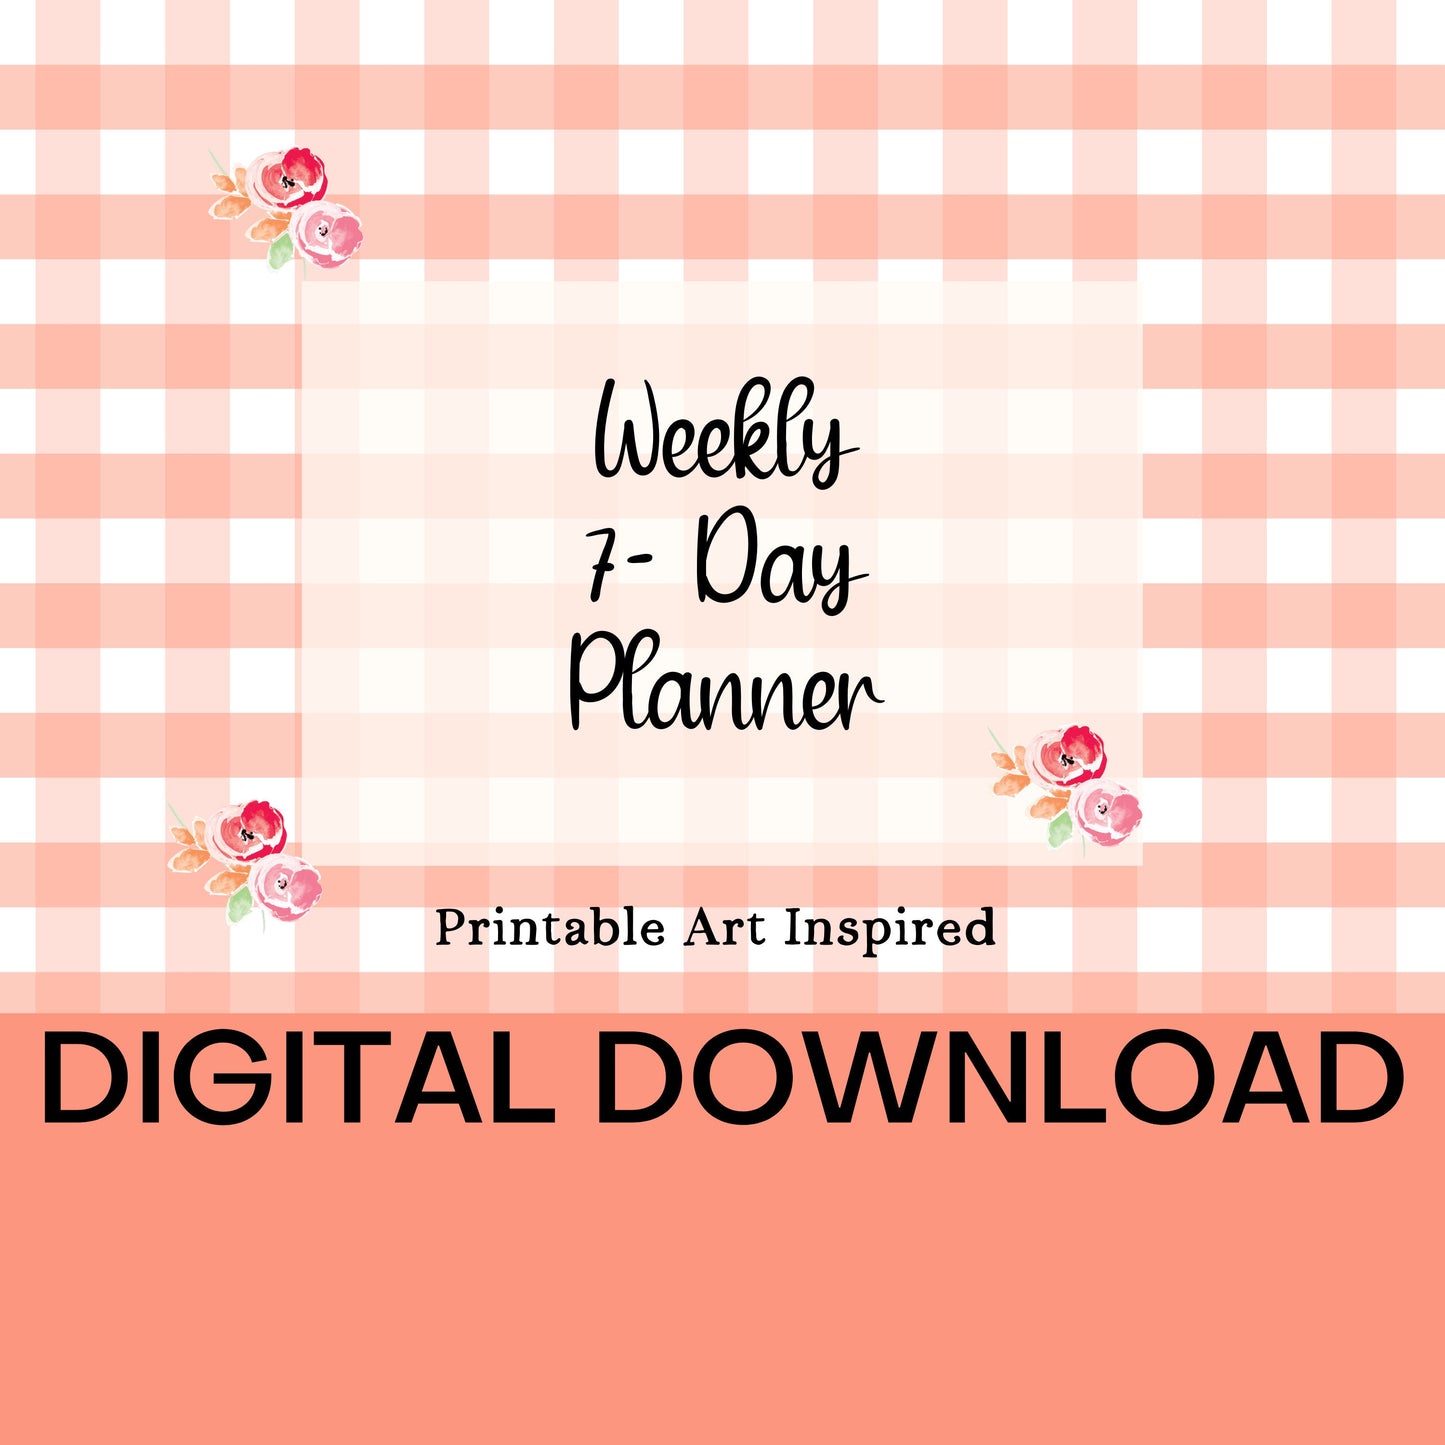 Weekly PDF Digital Download Planner for Organization